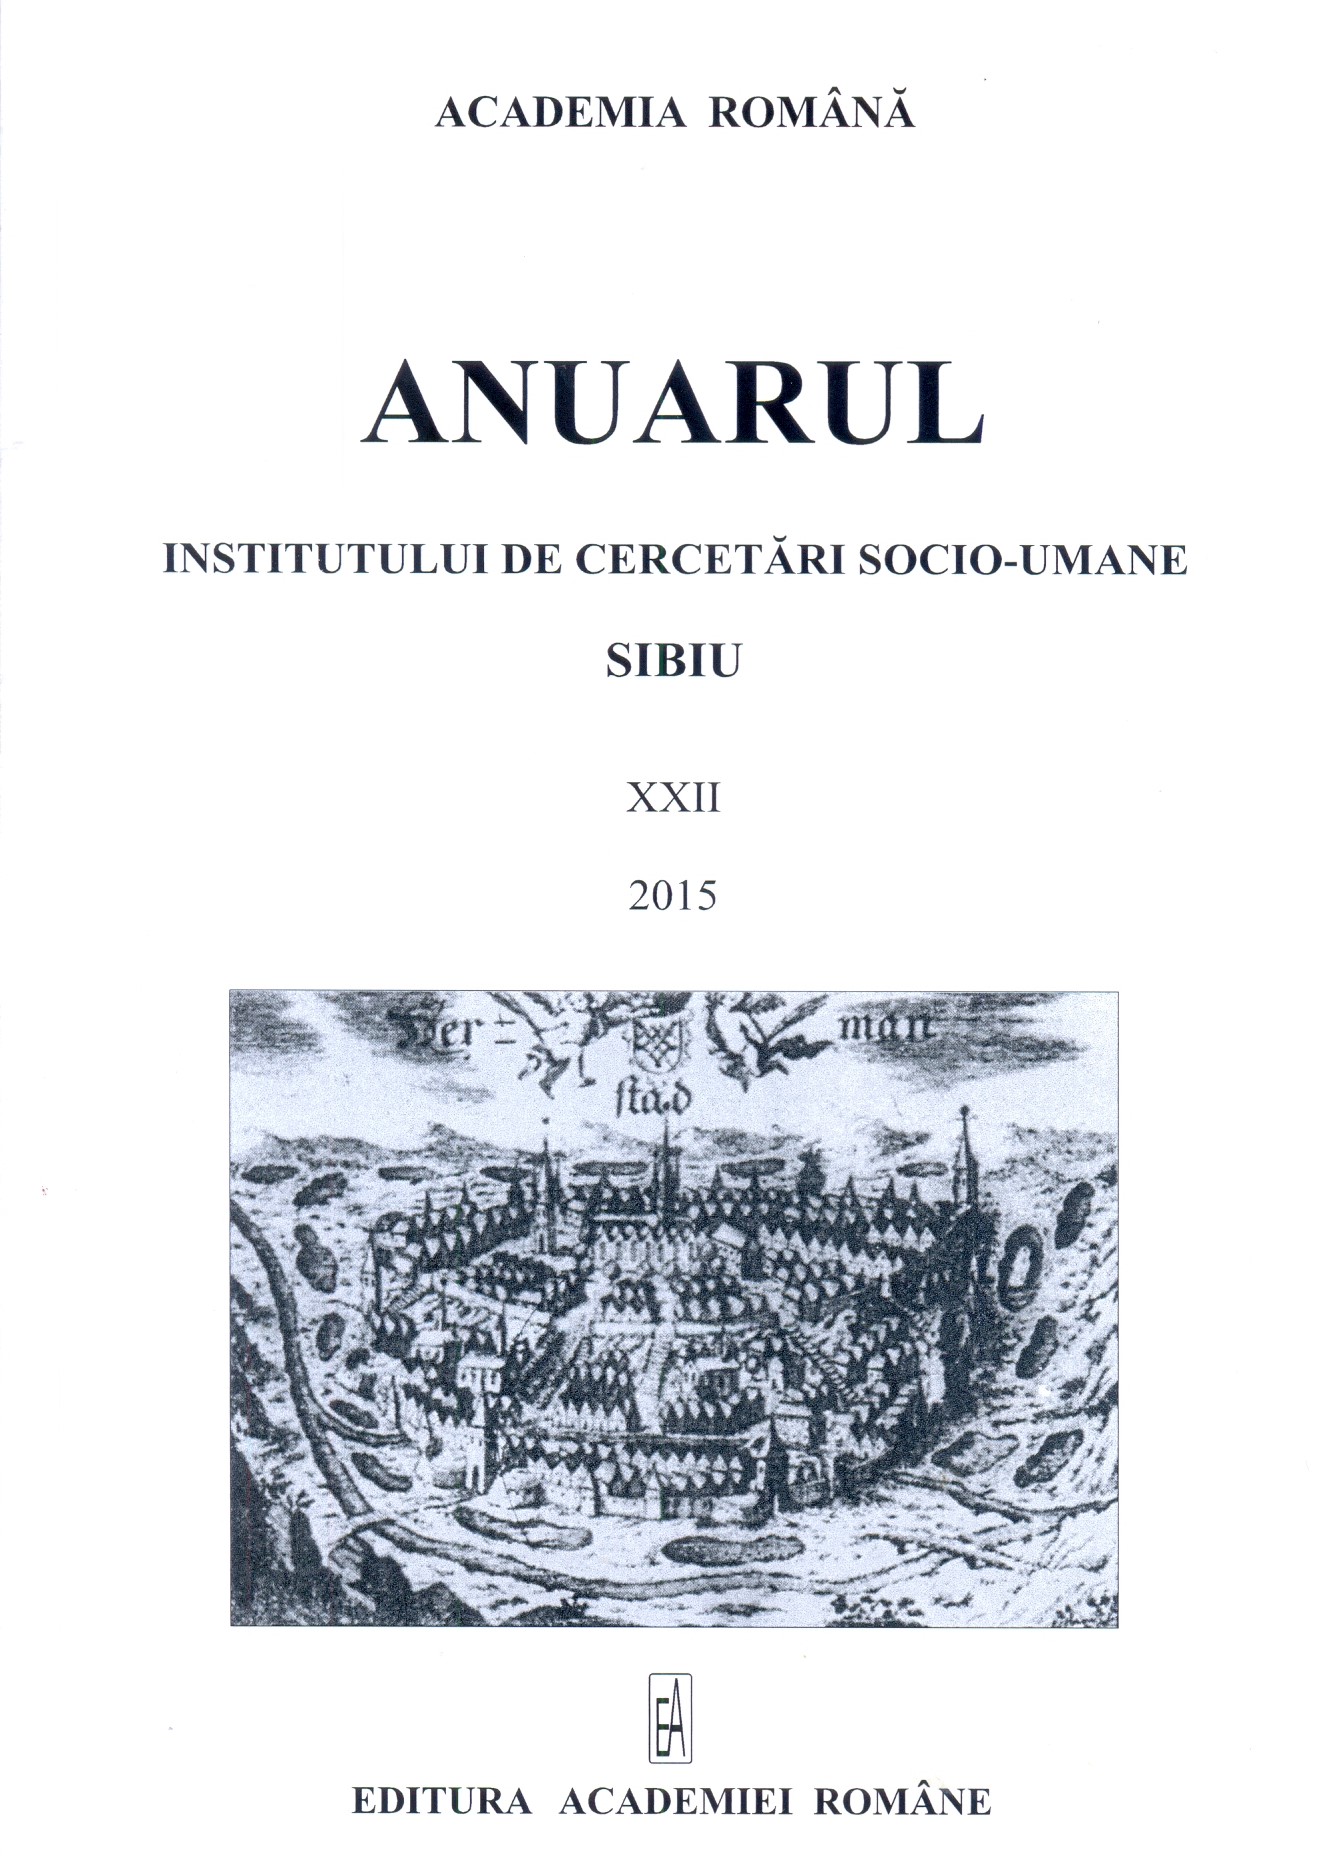 Works by the Austrian Historian Hans Von Zwiedineck-Südenhorst in the Brukenthal Library Cover Image